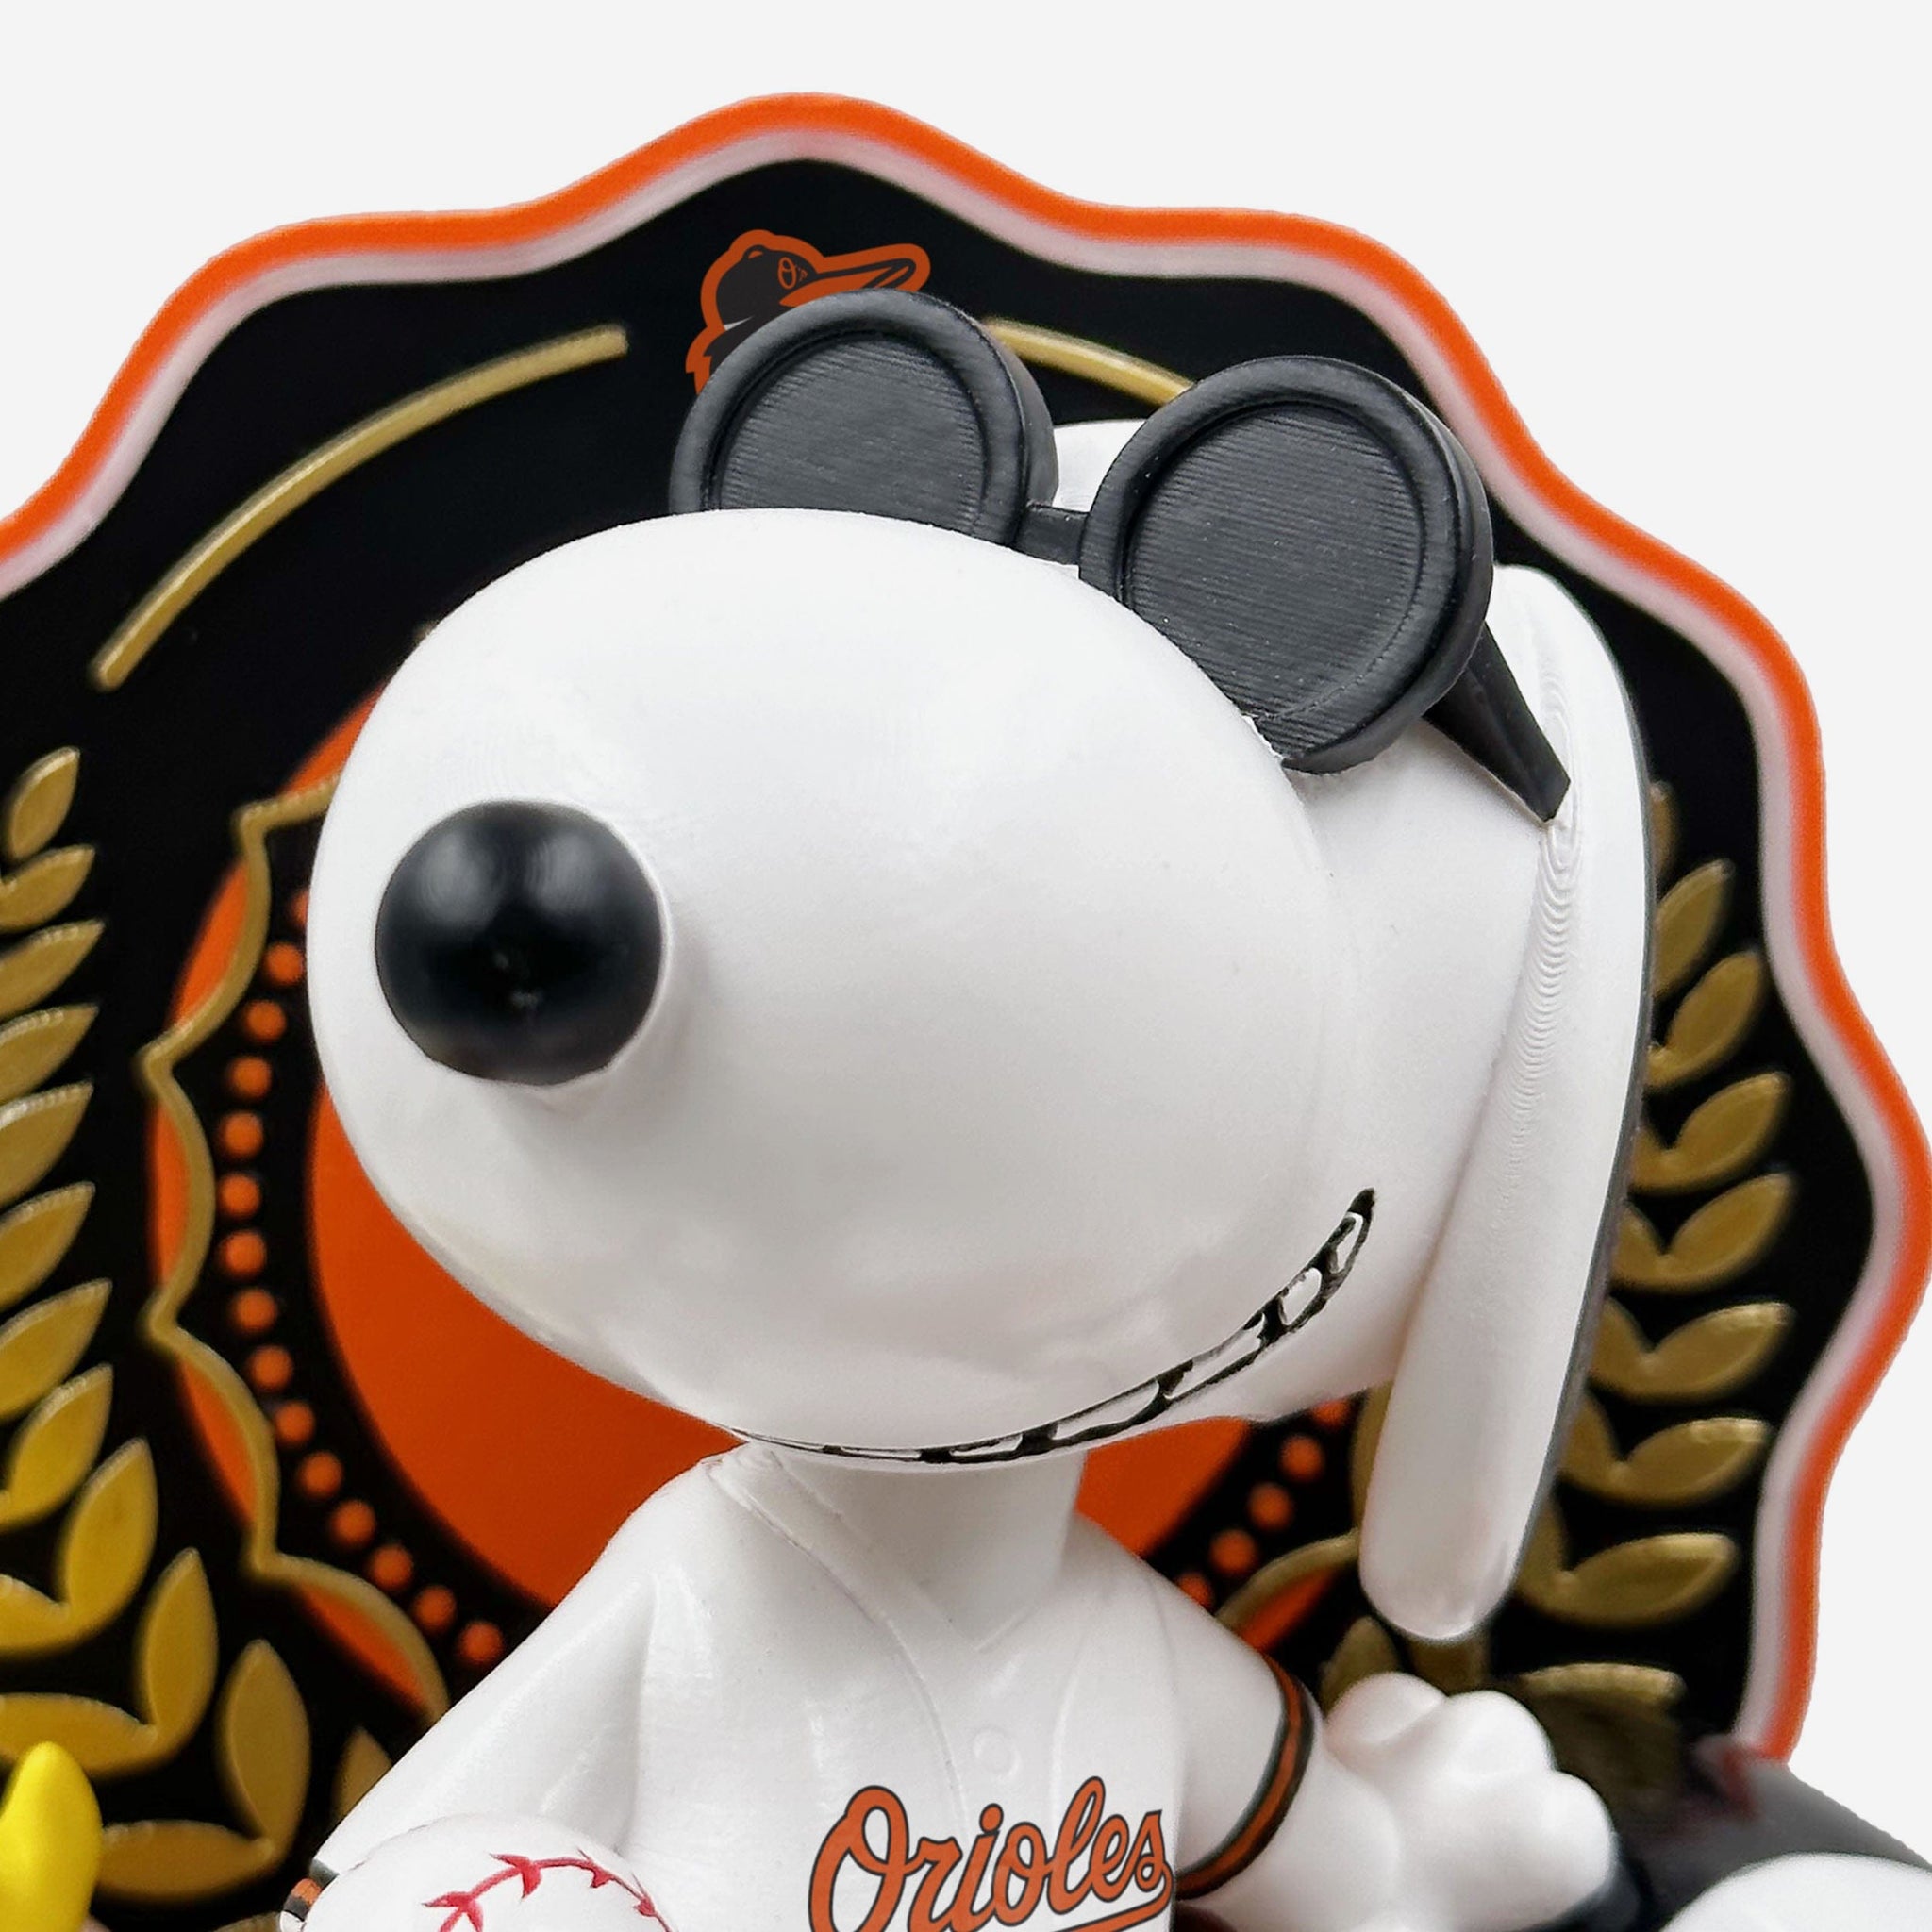 New York Yankees Snoopy Peanuts Bighead Bobblehead FOCO